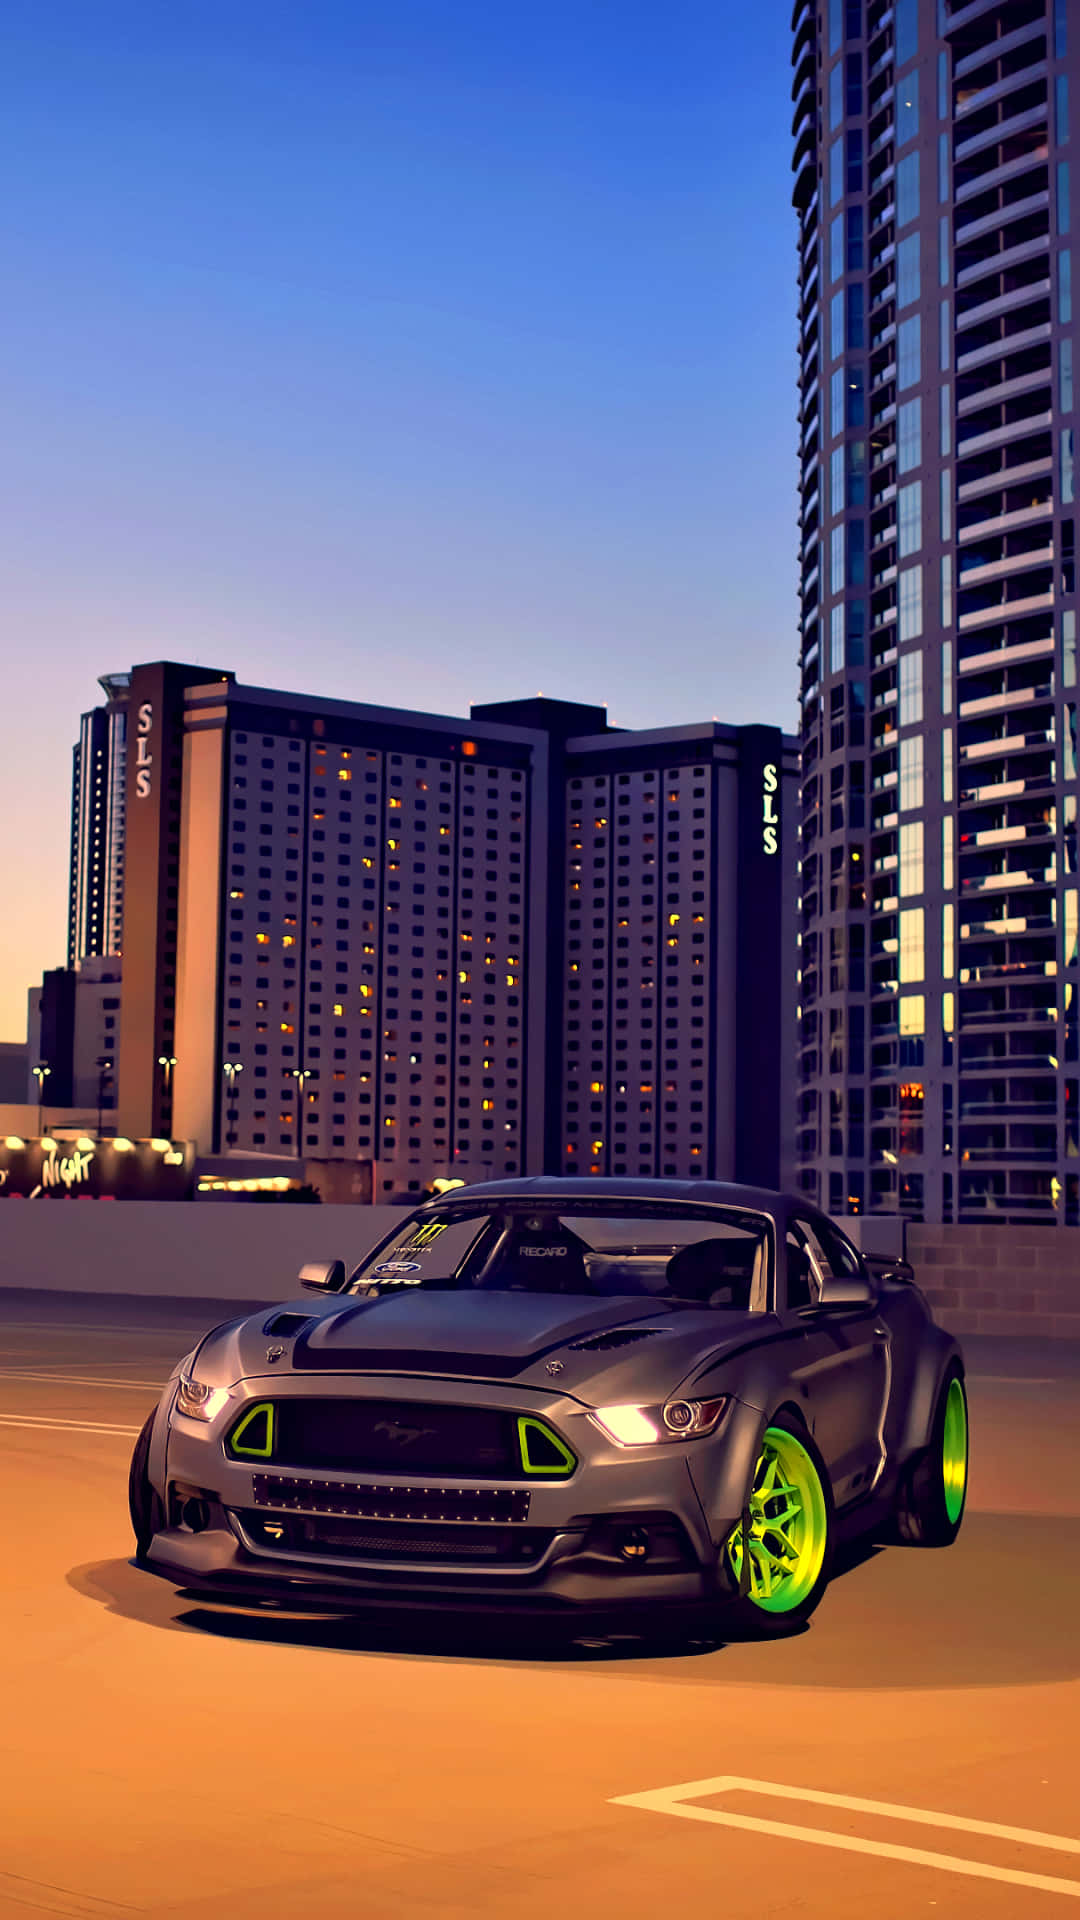 2015rtr Ford Mustang Bei Sonnenuntergang. Wallpaper